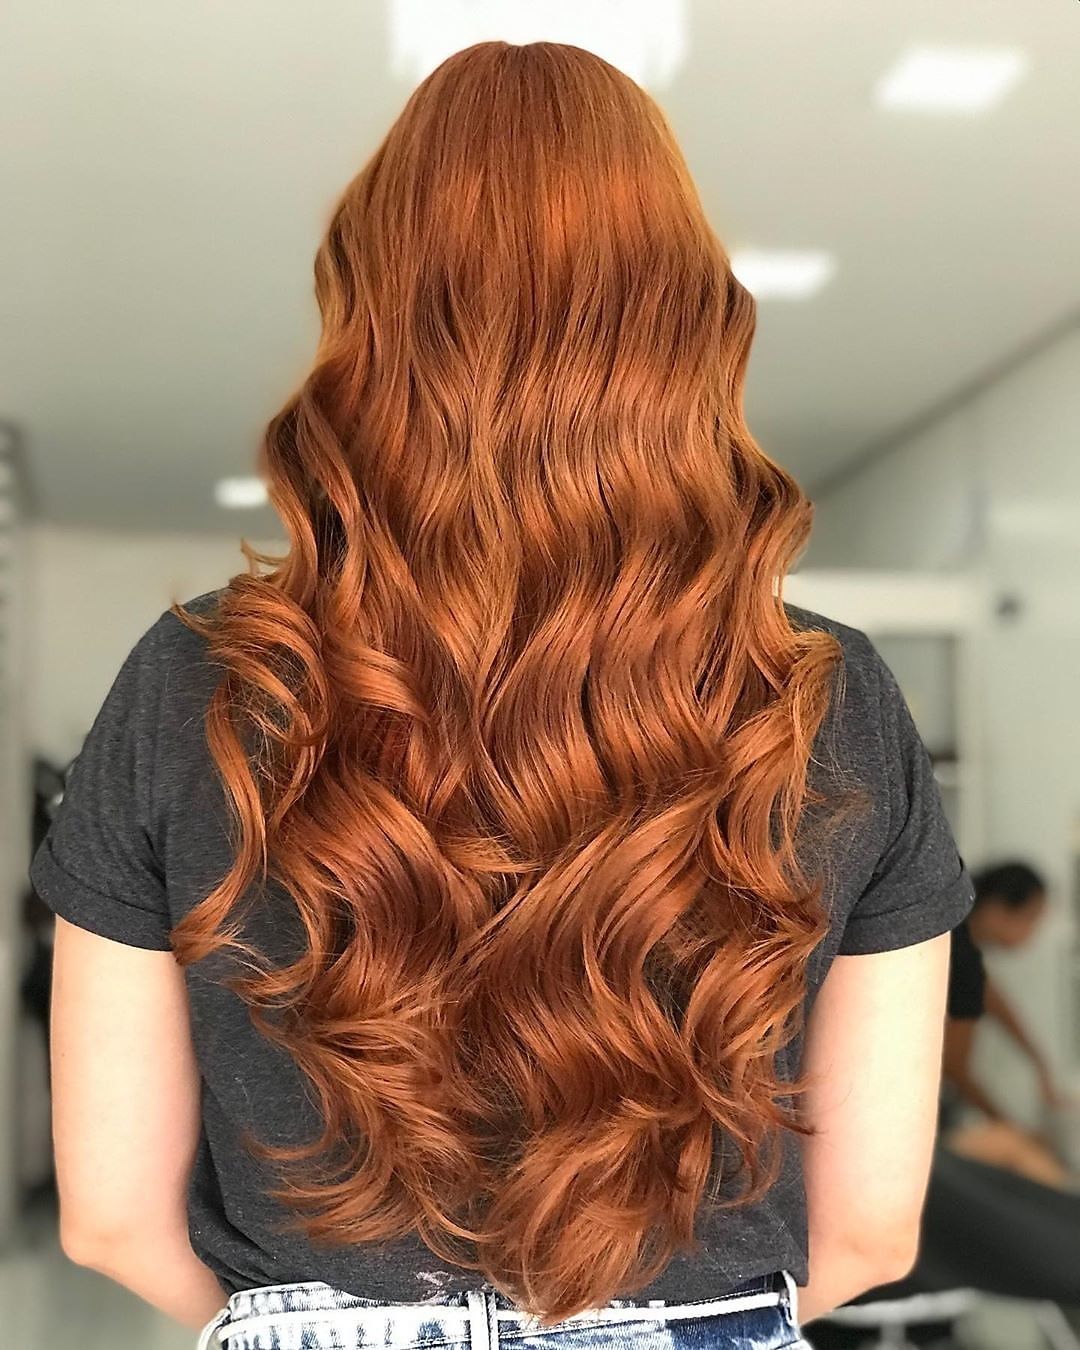 Schwarzkopf Professional - Copper hair is FIERCE 🔥
👉 @jofernandesoficial with #IGORAROYAL 8.77
#IGORA #redhair #copperhair #haircolour #hairartist #hairinspo  #sharingiscaring #apassionforhair